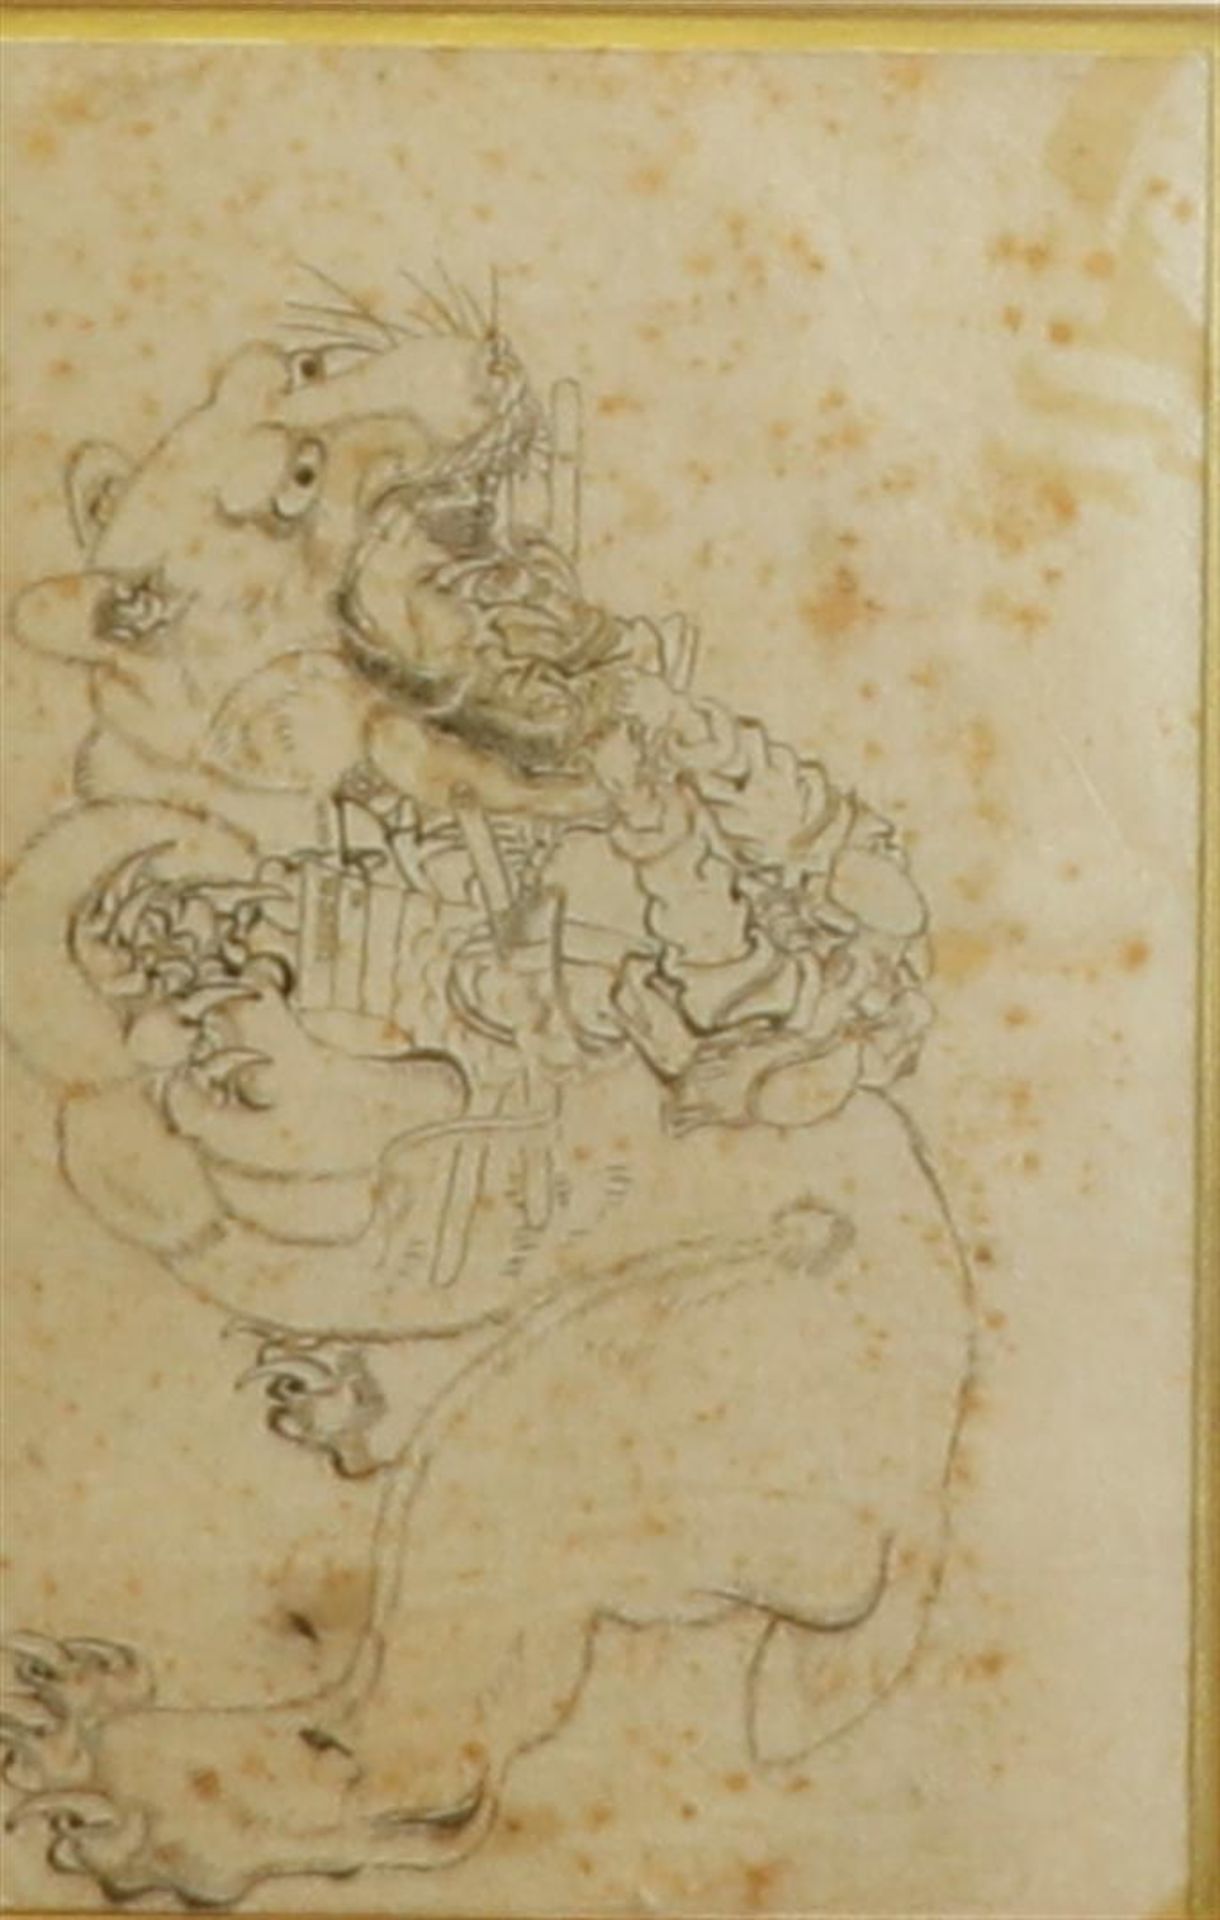 A Japanese woodcut depicting a warrior slaying a bear